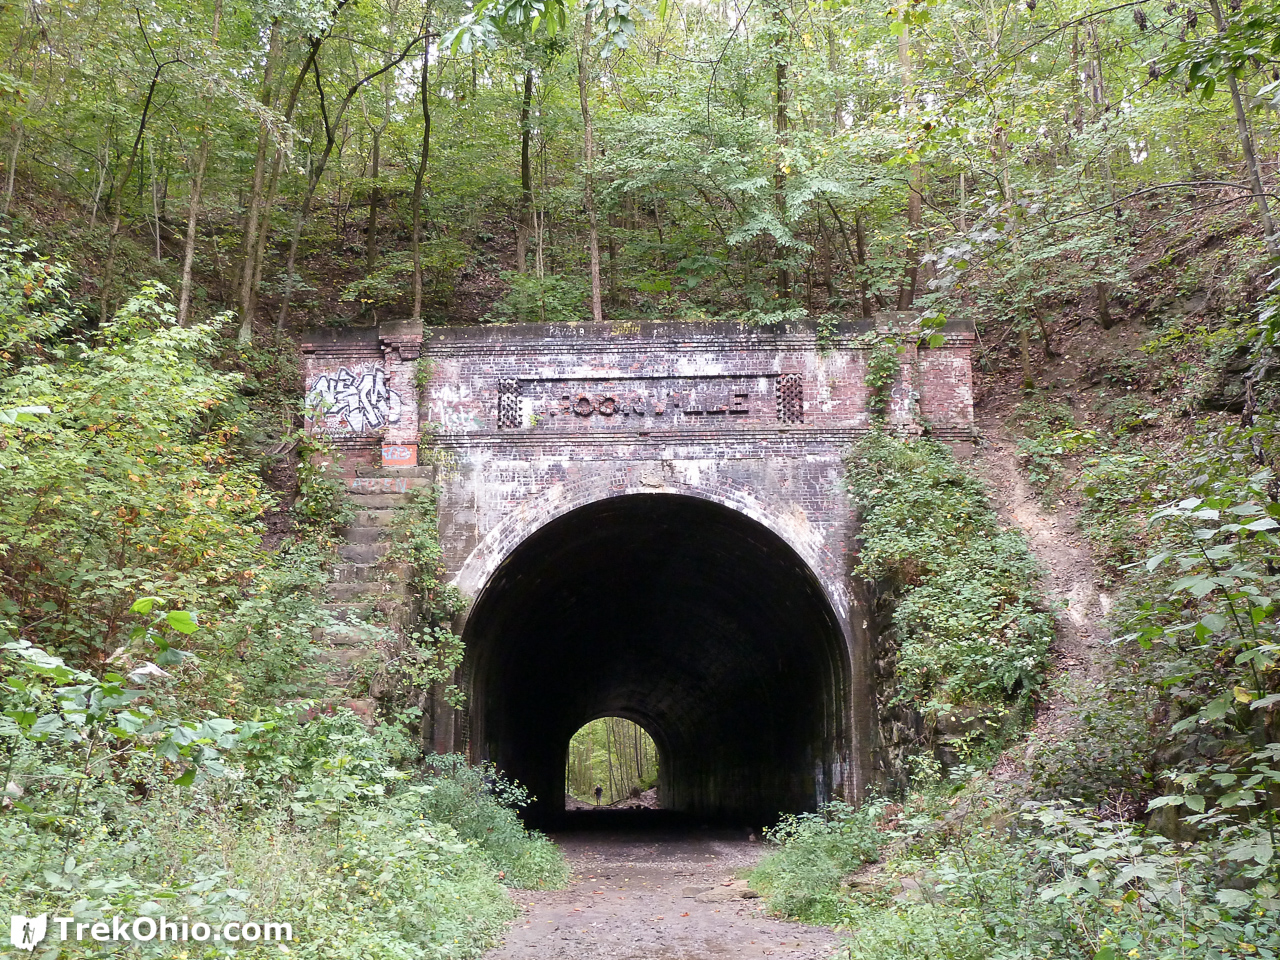 Zaleski State Forest: Moonville Tunnel